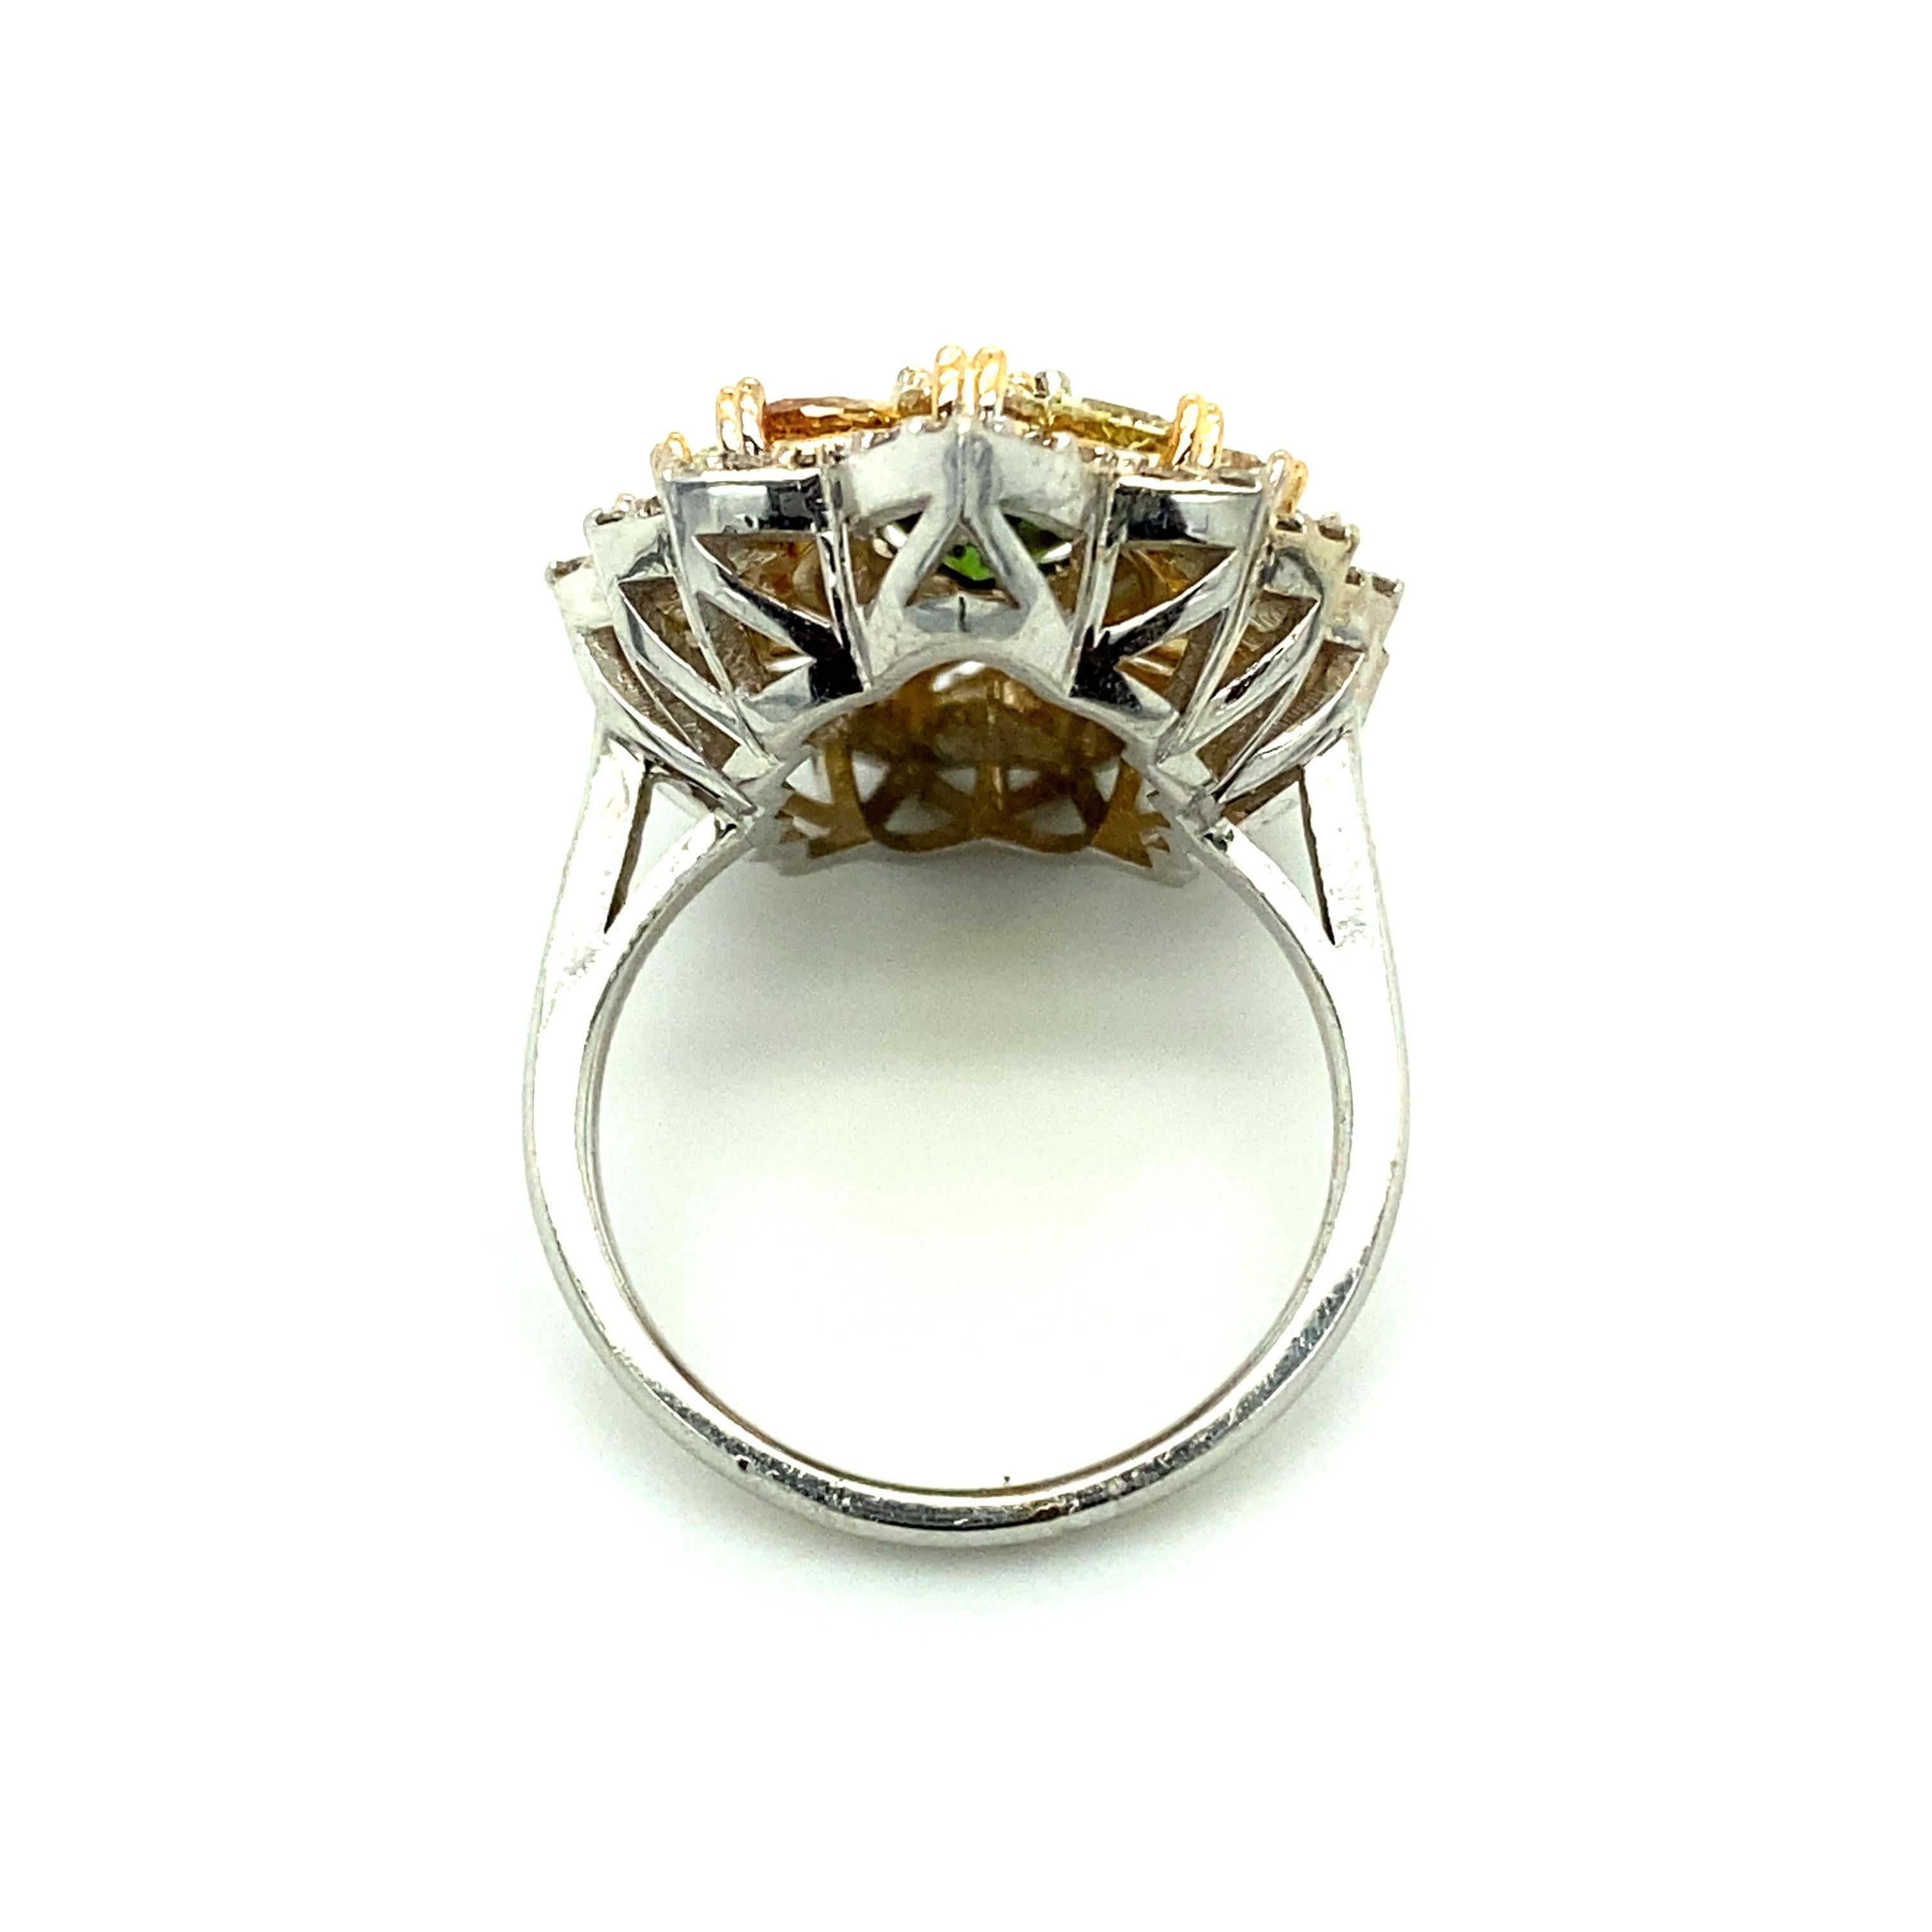 Contemporary 6.60 Ct Green Tourmaline & Multi-Color Diamond Ring in 18kt White Gold